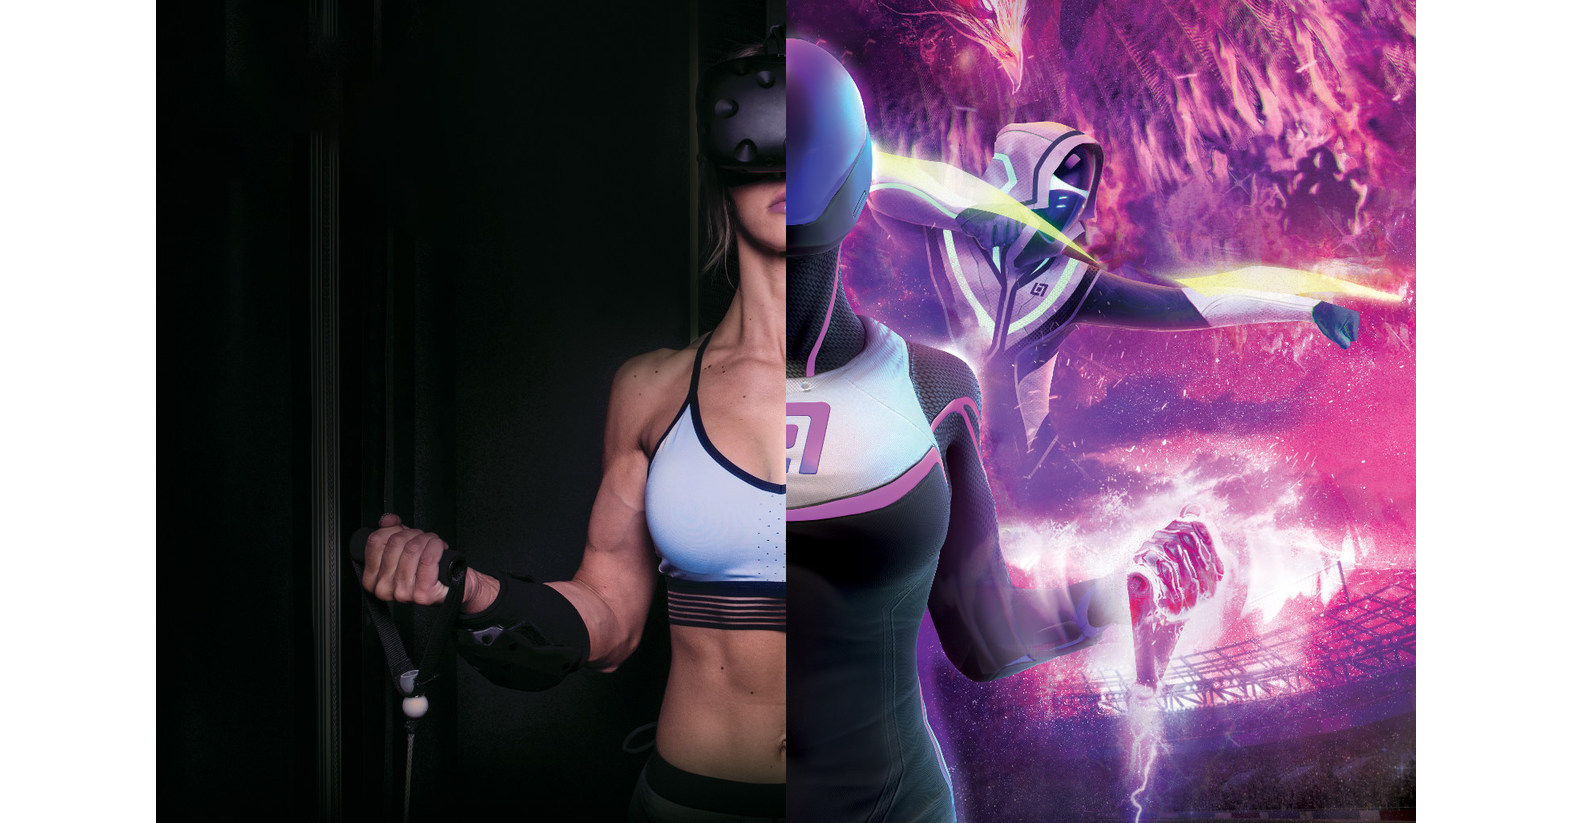 Vr фитнес. VR спорт. VR технологии в спорте. Виртуальная реальность фитнес. Тренировка в виртуальной реальности.